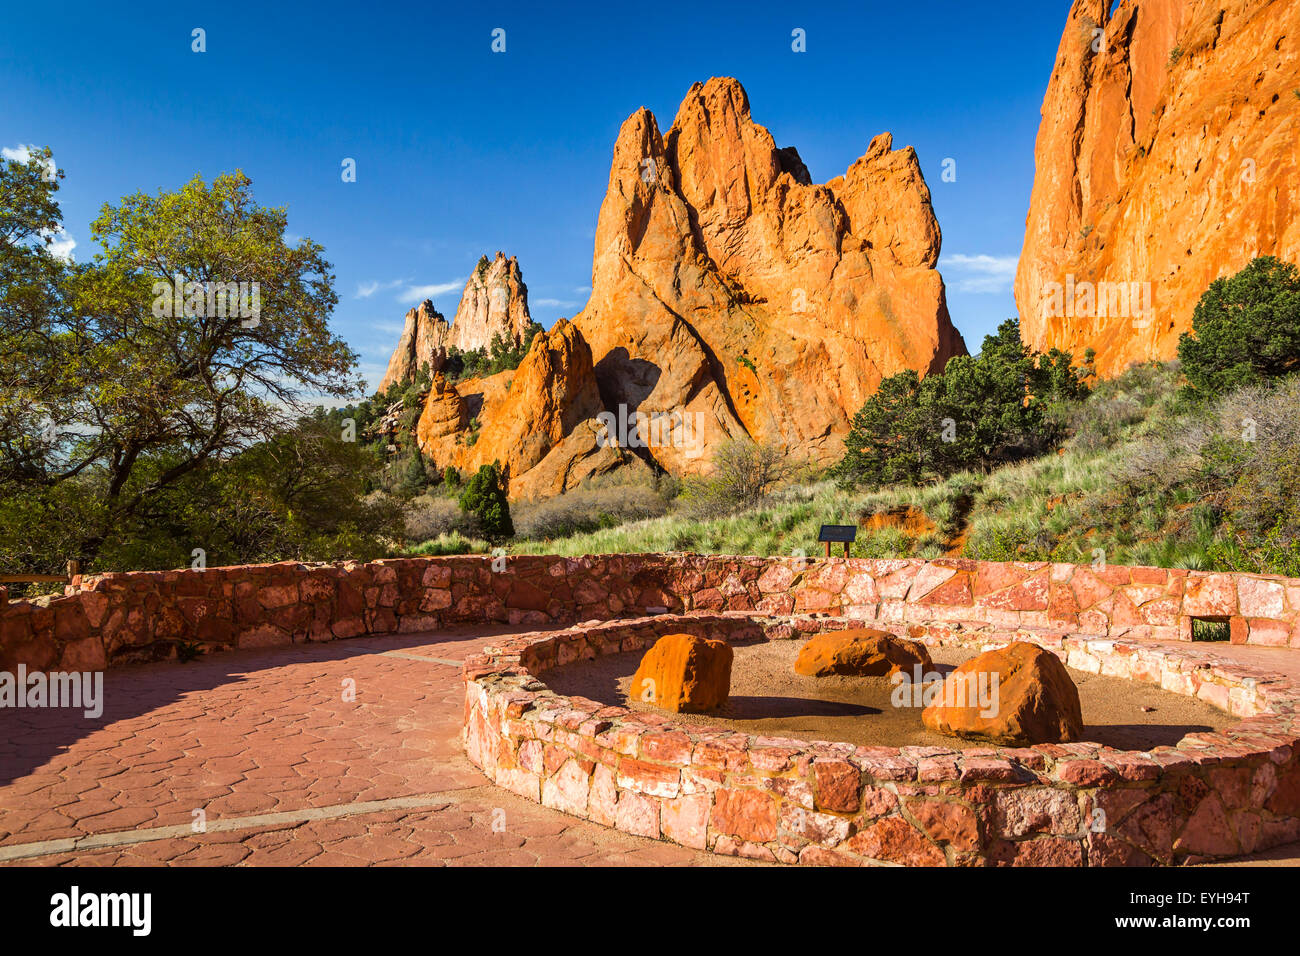 The rock formations in the Garden of the Gods National Natural Landmark near Colorado Springs, Colorado, USA. Stock Photo